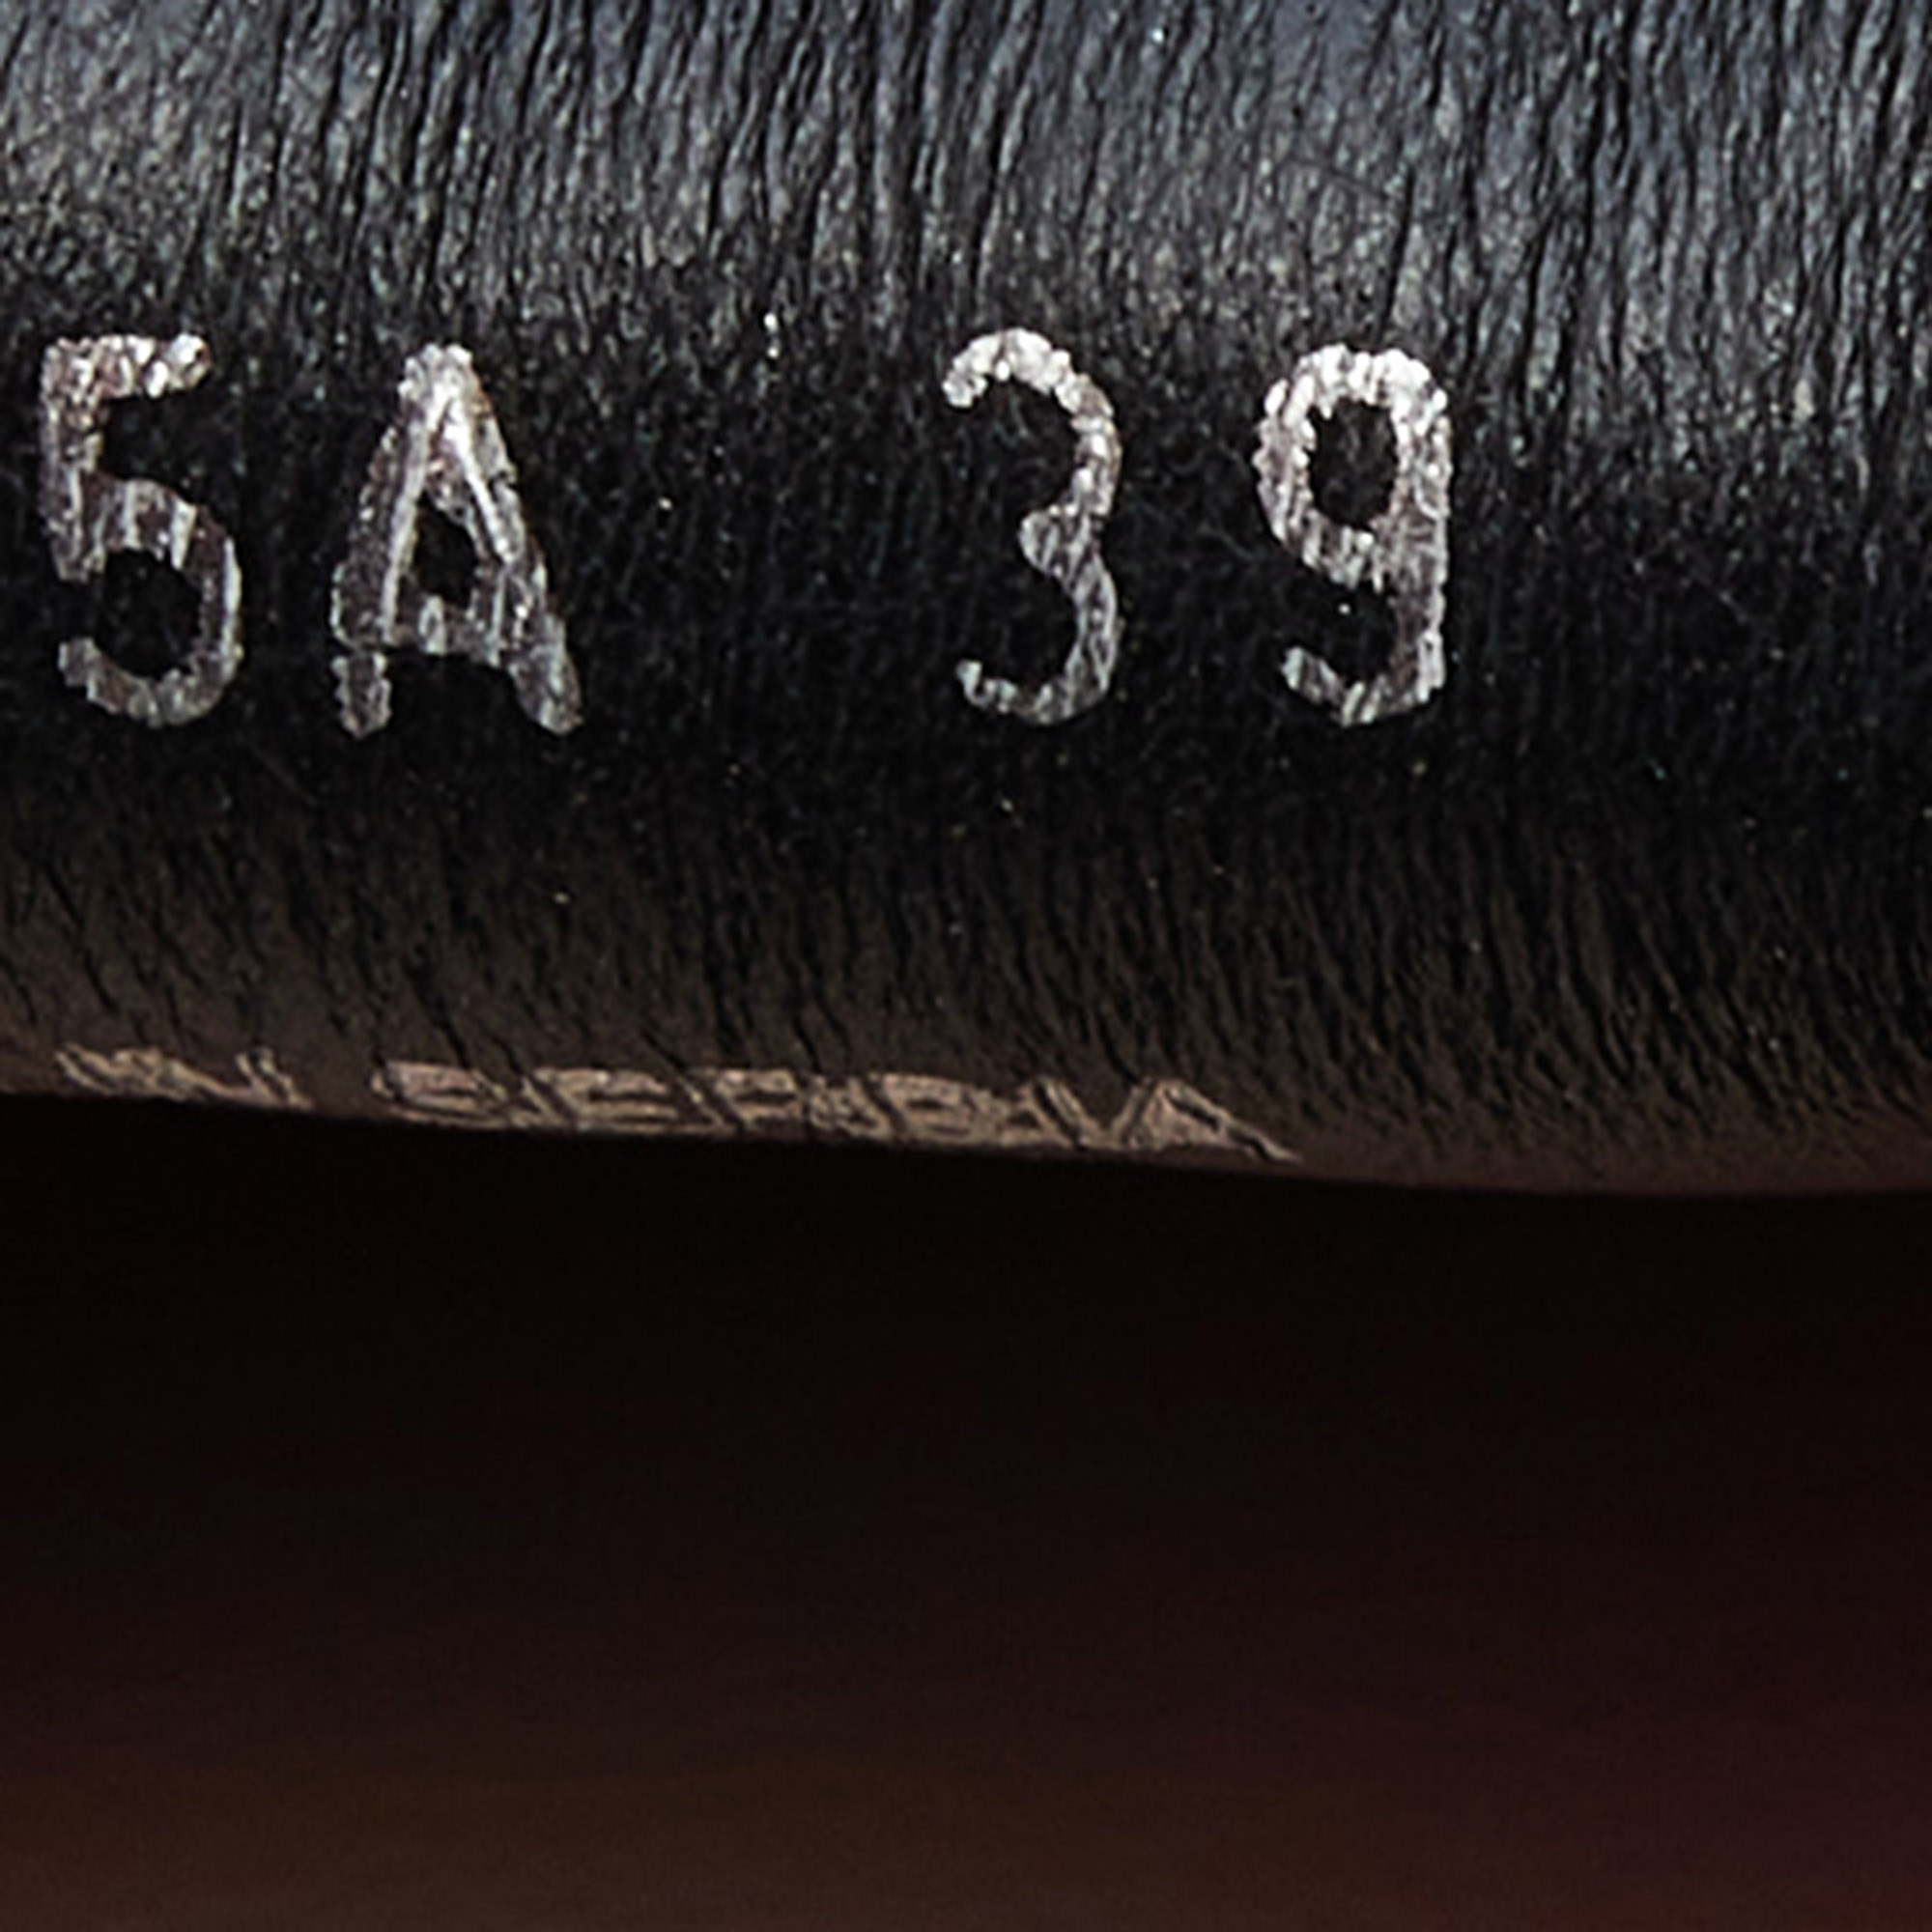 Miu Miu Black Leather Platform Slingback Sneakers Size 39